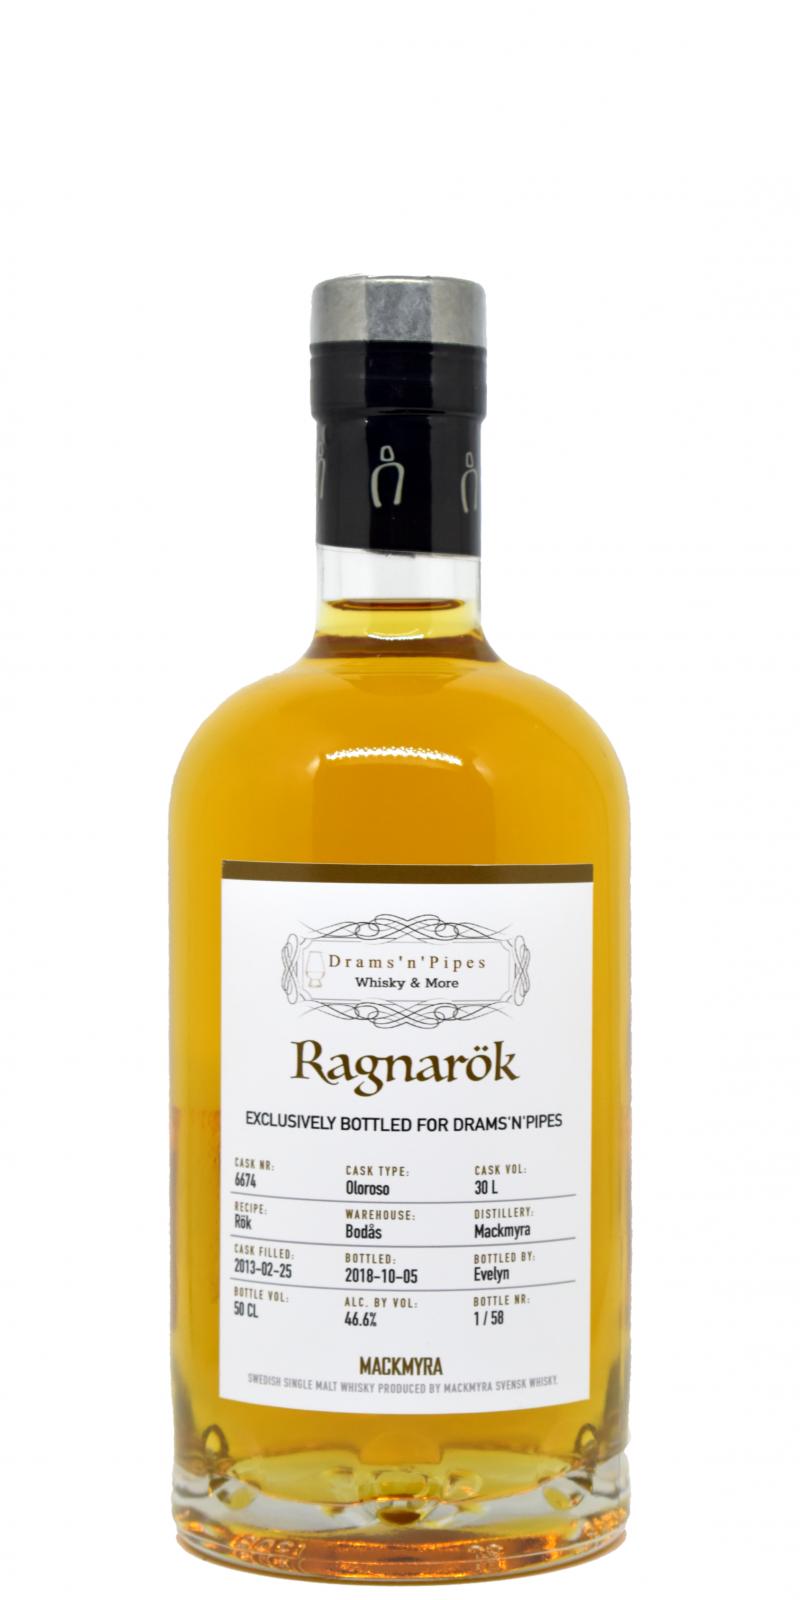 Mackmyra 2013 Ragnarok Oloroso #6674 Drams'n'Pipes Whisky & More 46.6% 500ml